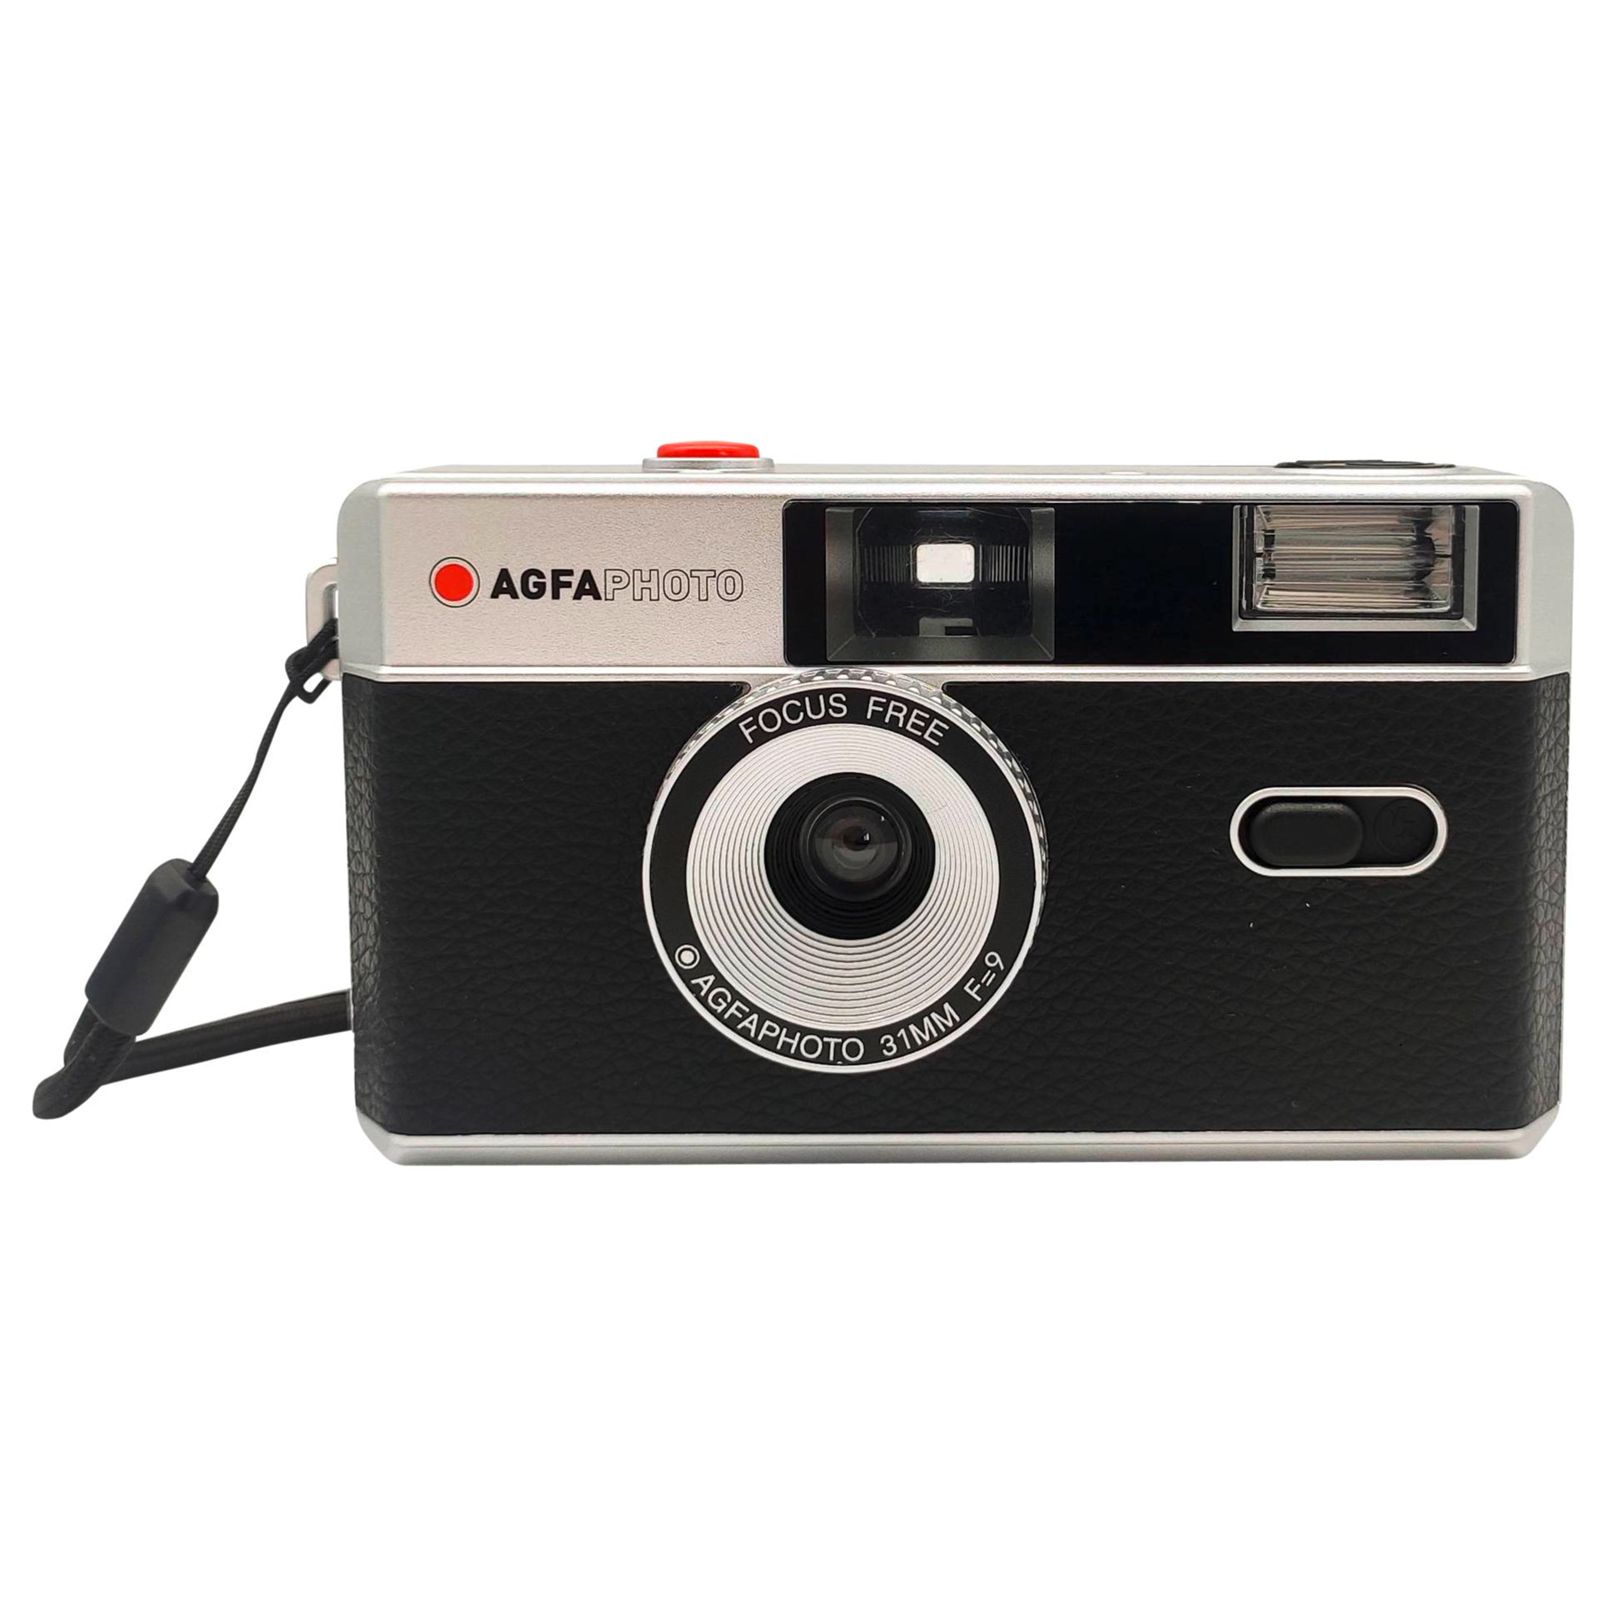 Agfaphoto Reusable Photo Camera 35mm nero